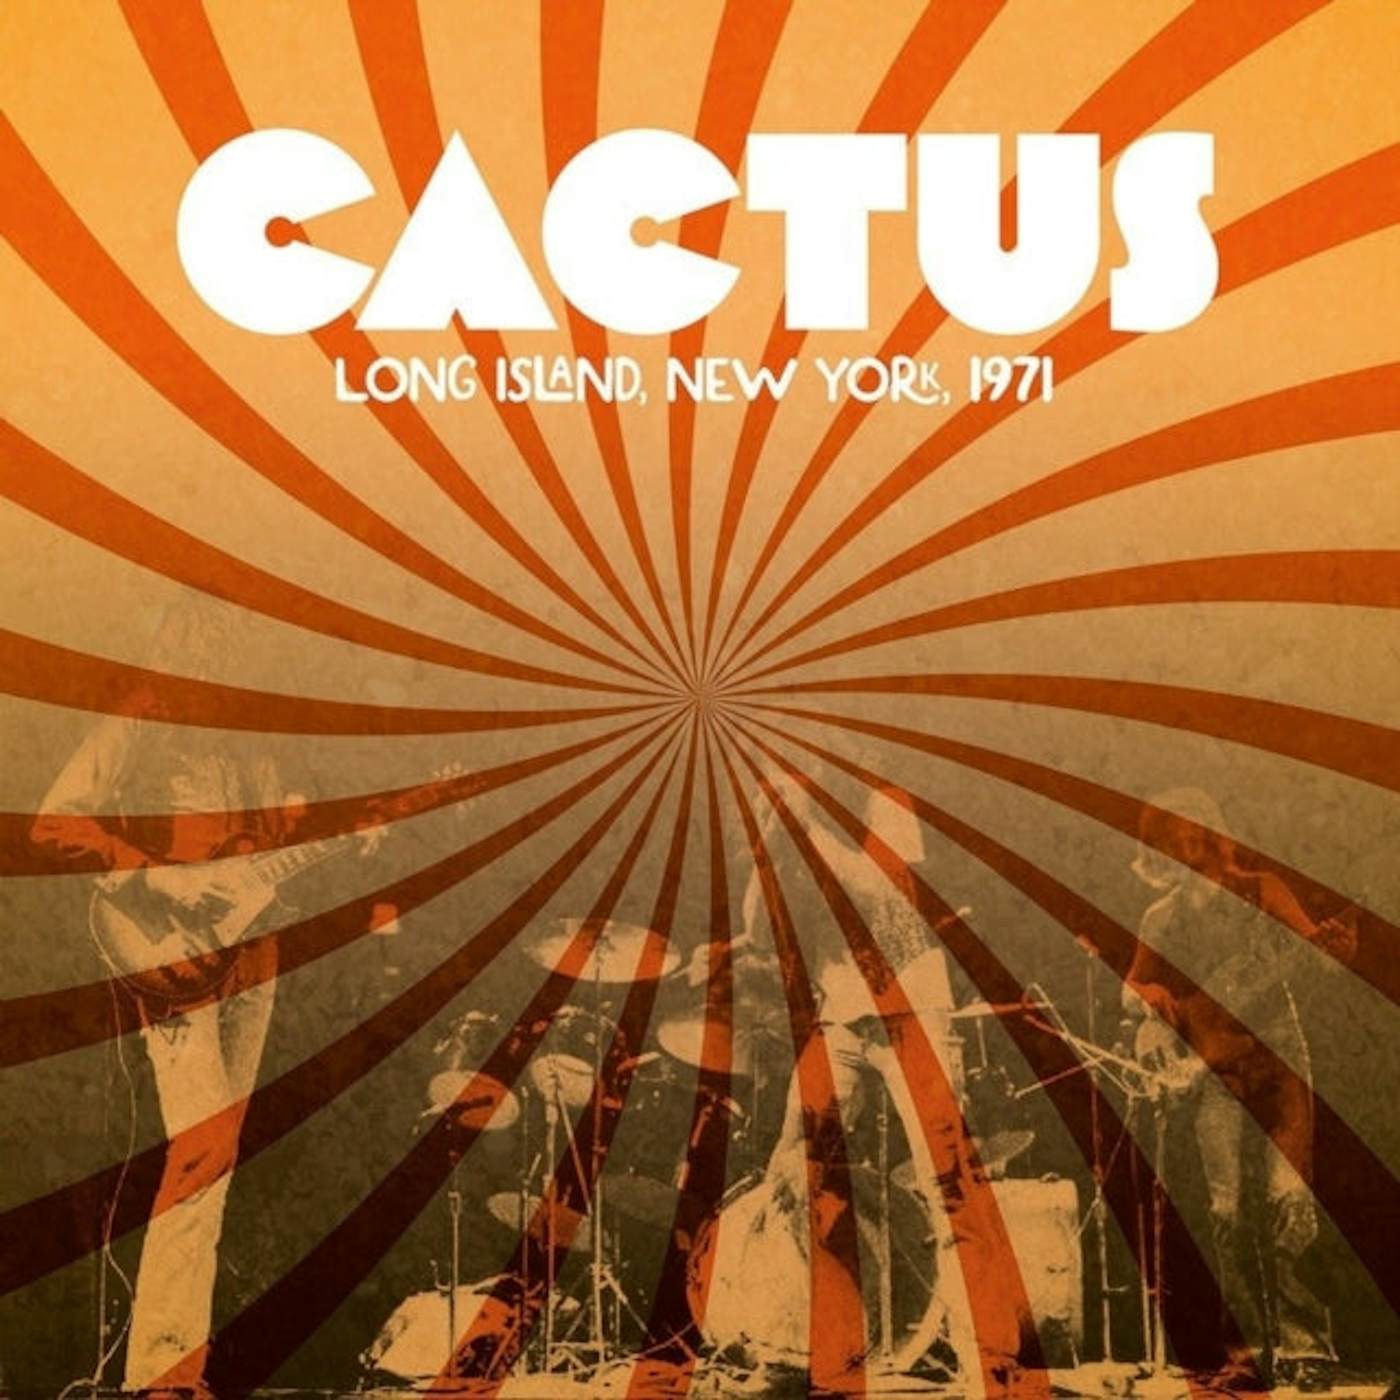 Cactus LP Vinyl Record - Long Island. Ny 19 71 - Wlir Fm Brodcast